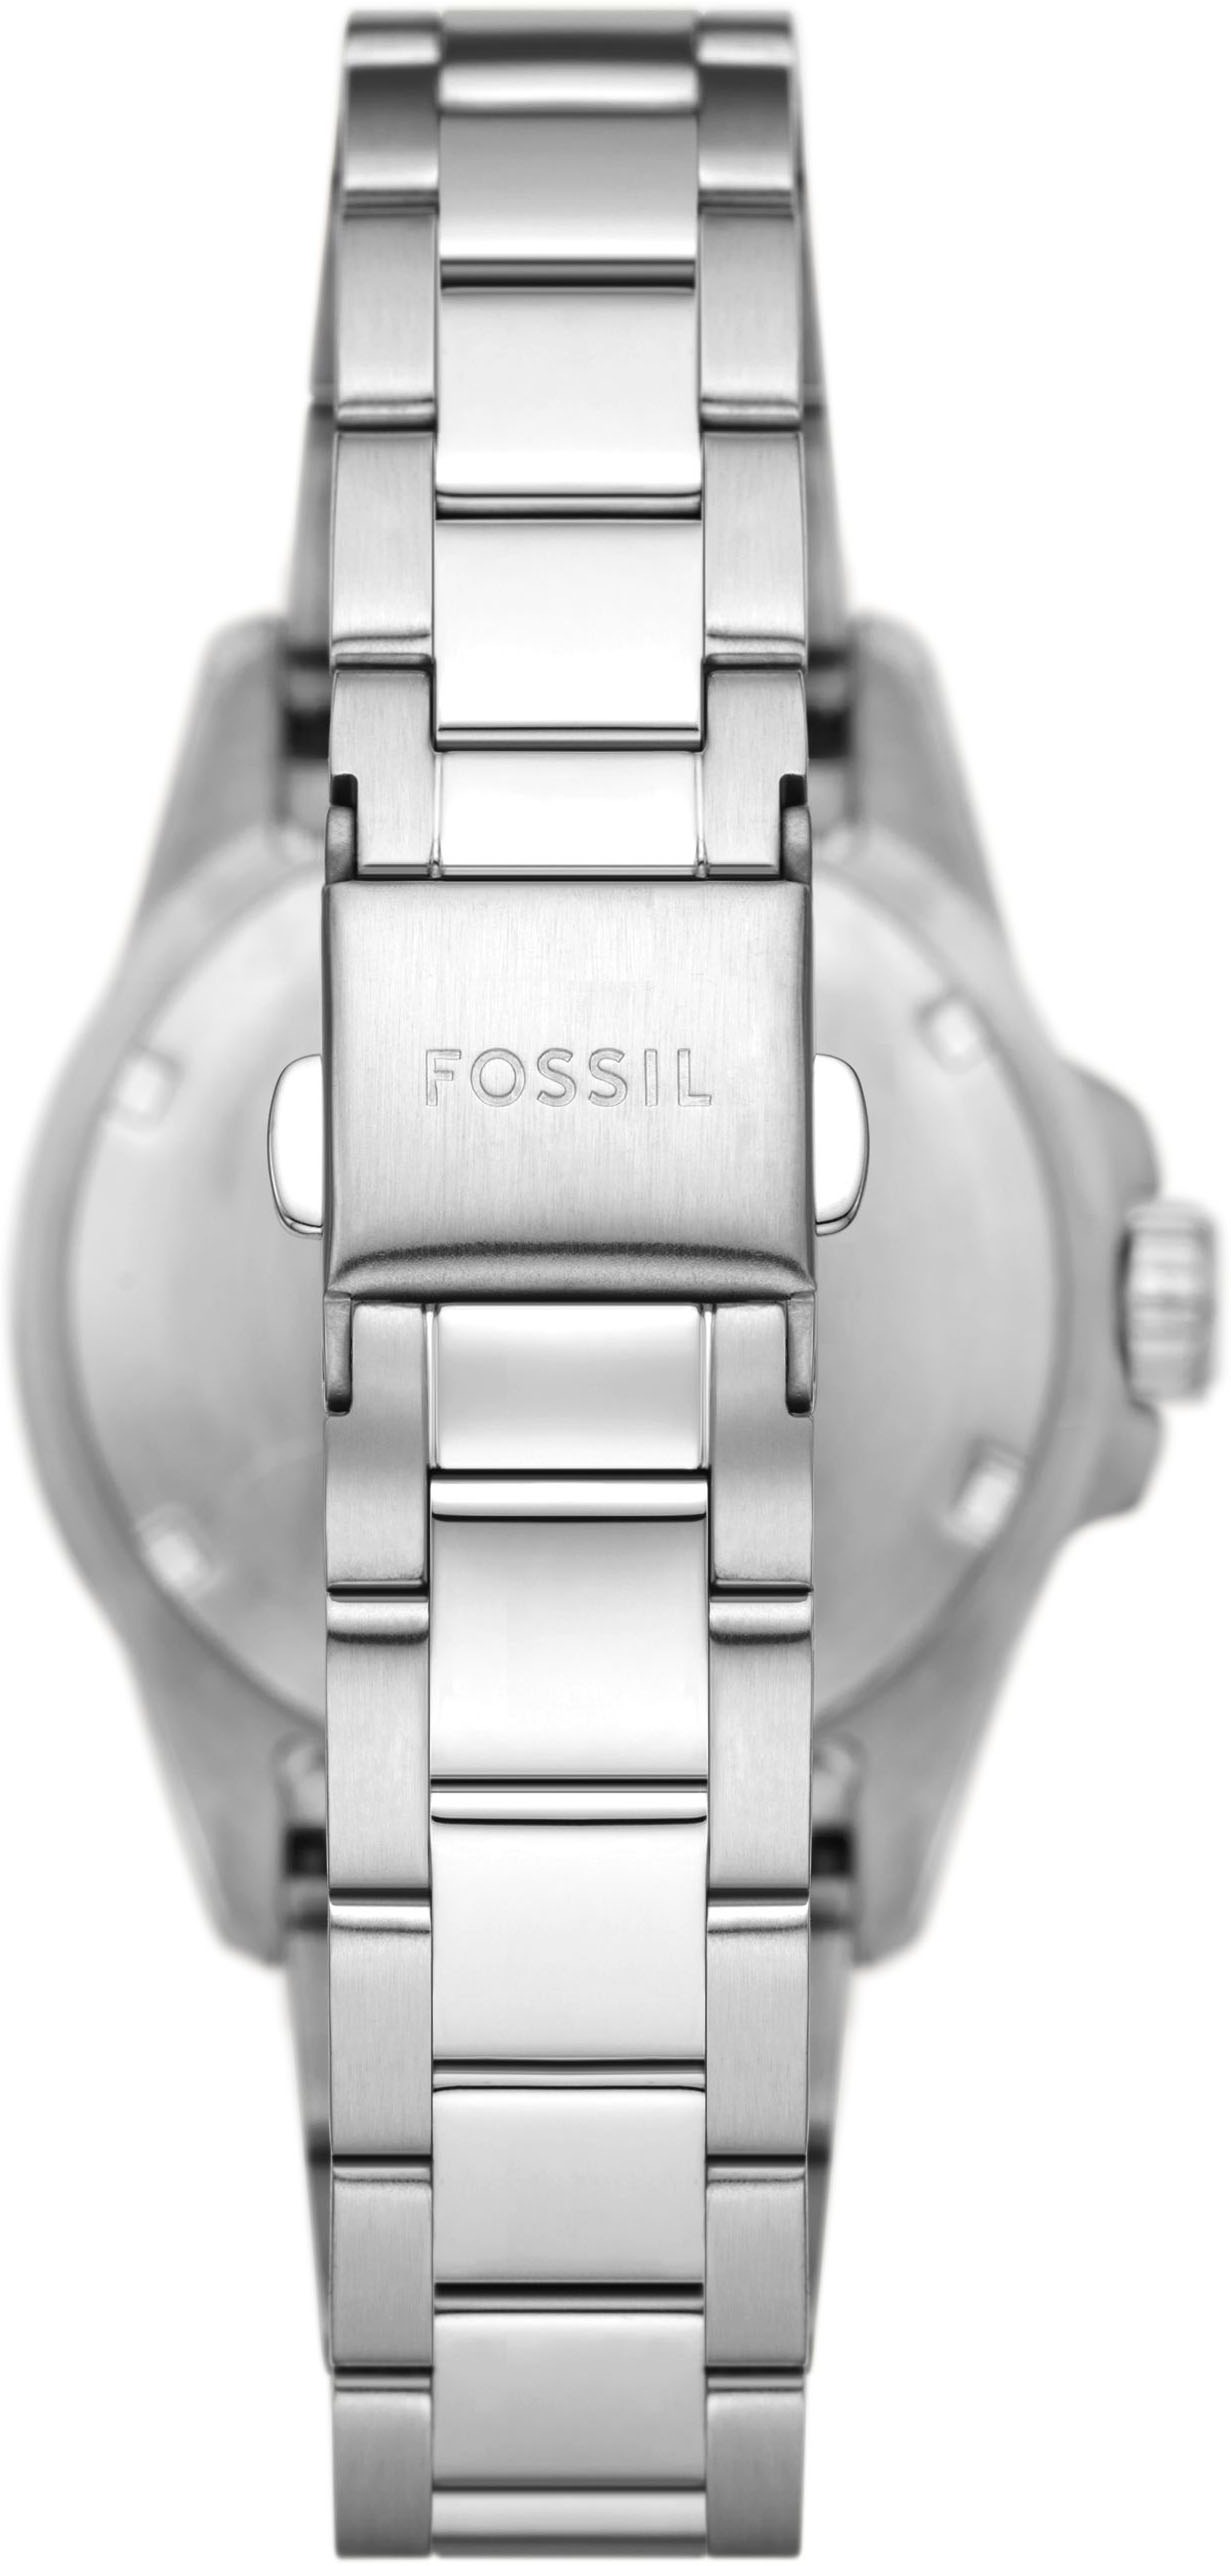 Fossil Quarzuhr »FOSSIL BLUE DIVE LADIES«, Armbanduhr, Damenuhr, Edelstahlarmband, bis 10 bar wasserdicht